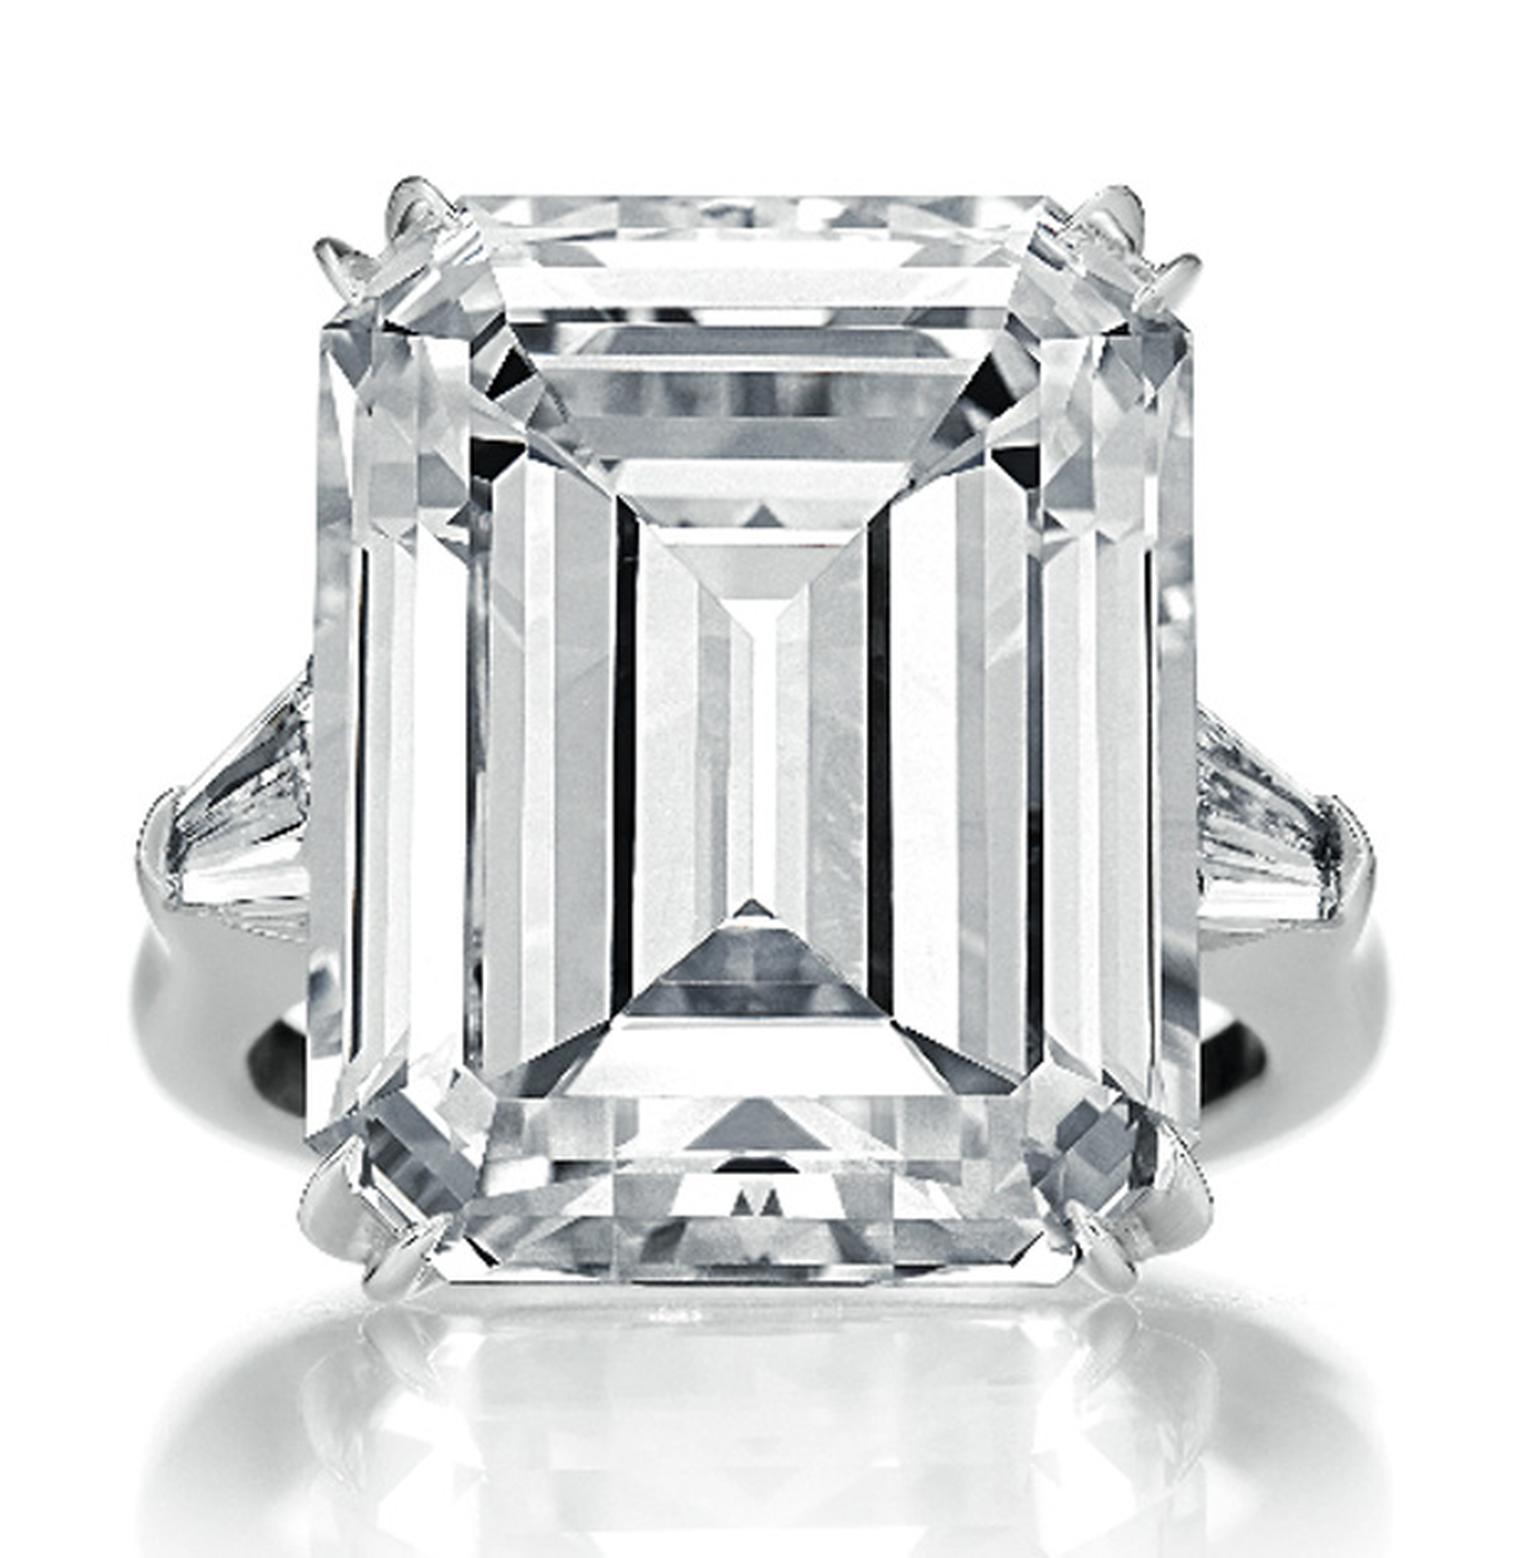 Harry Winston Classic emerald-cut diamond ring